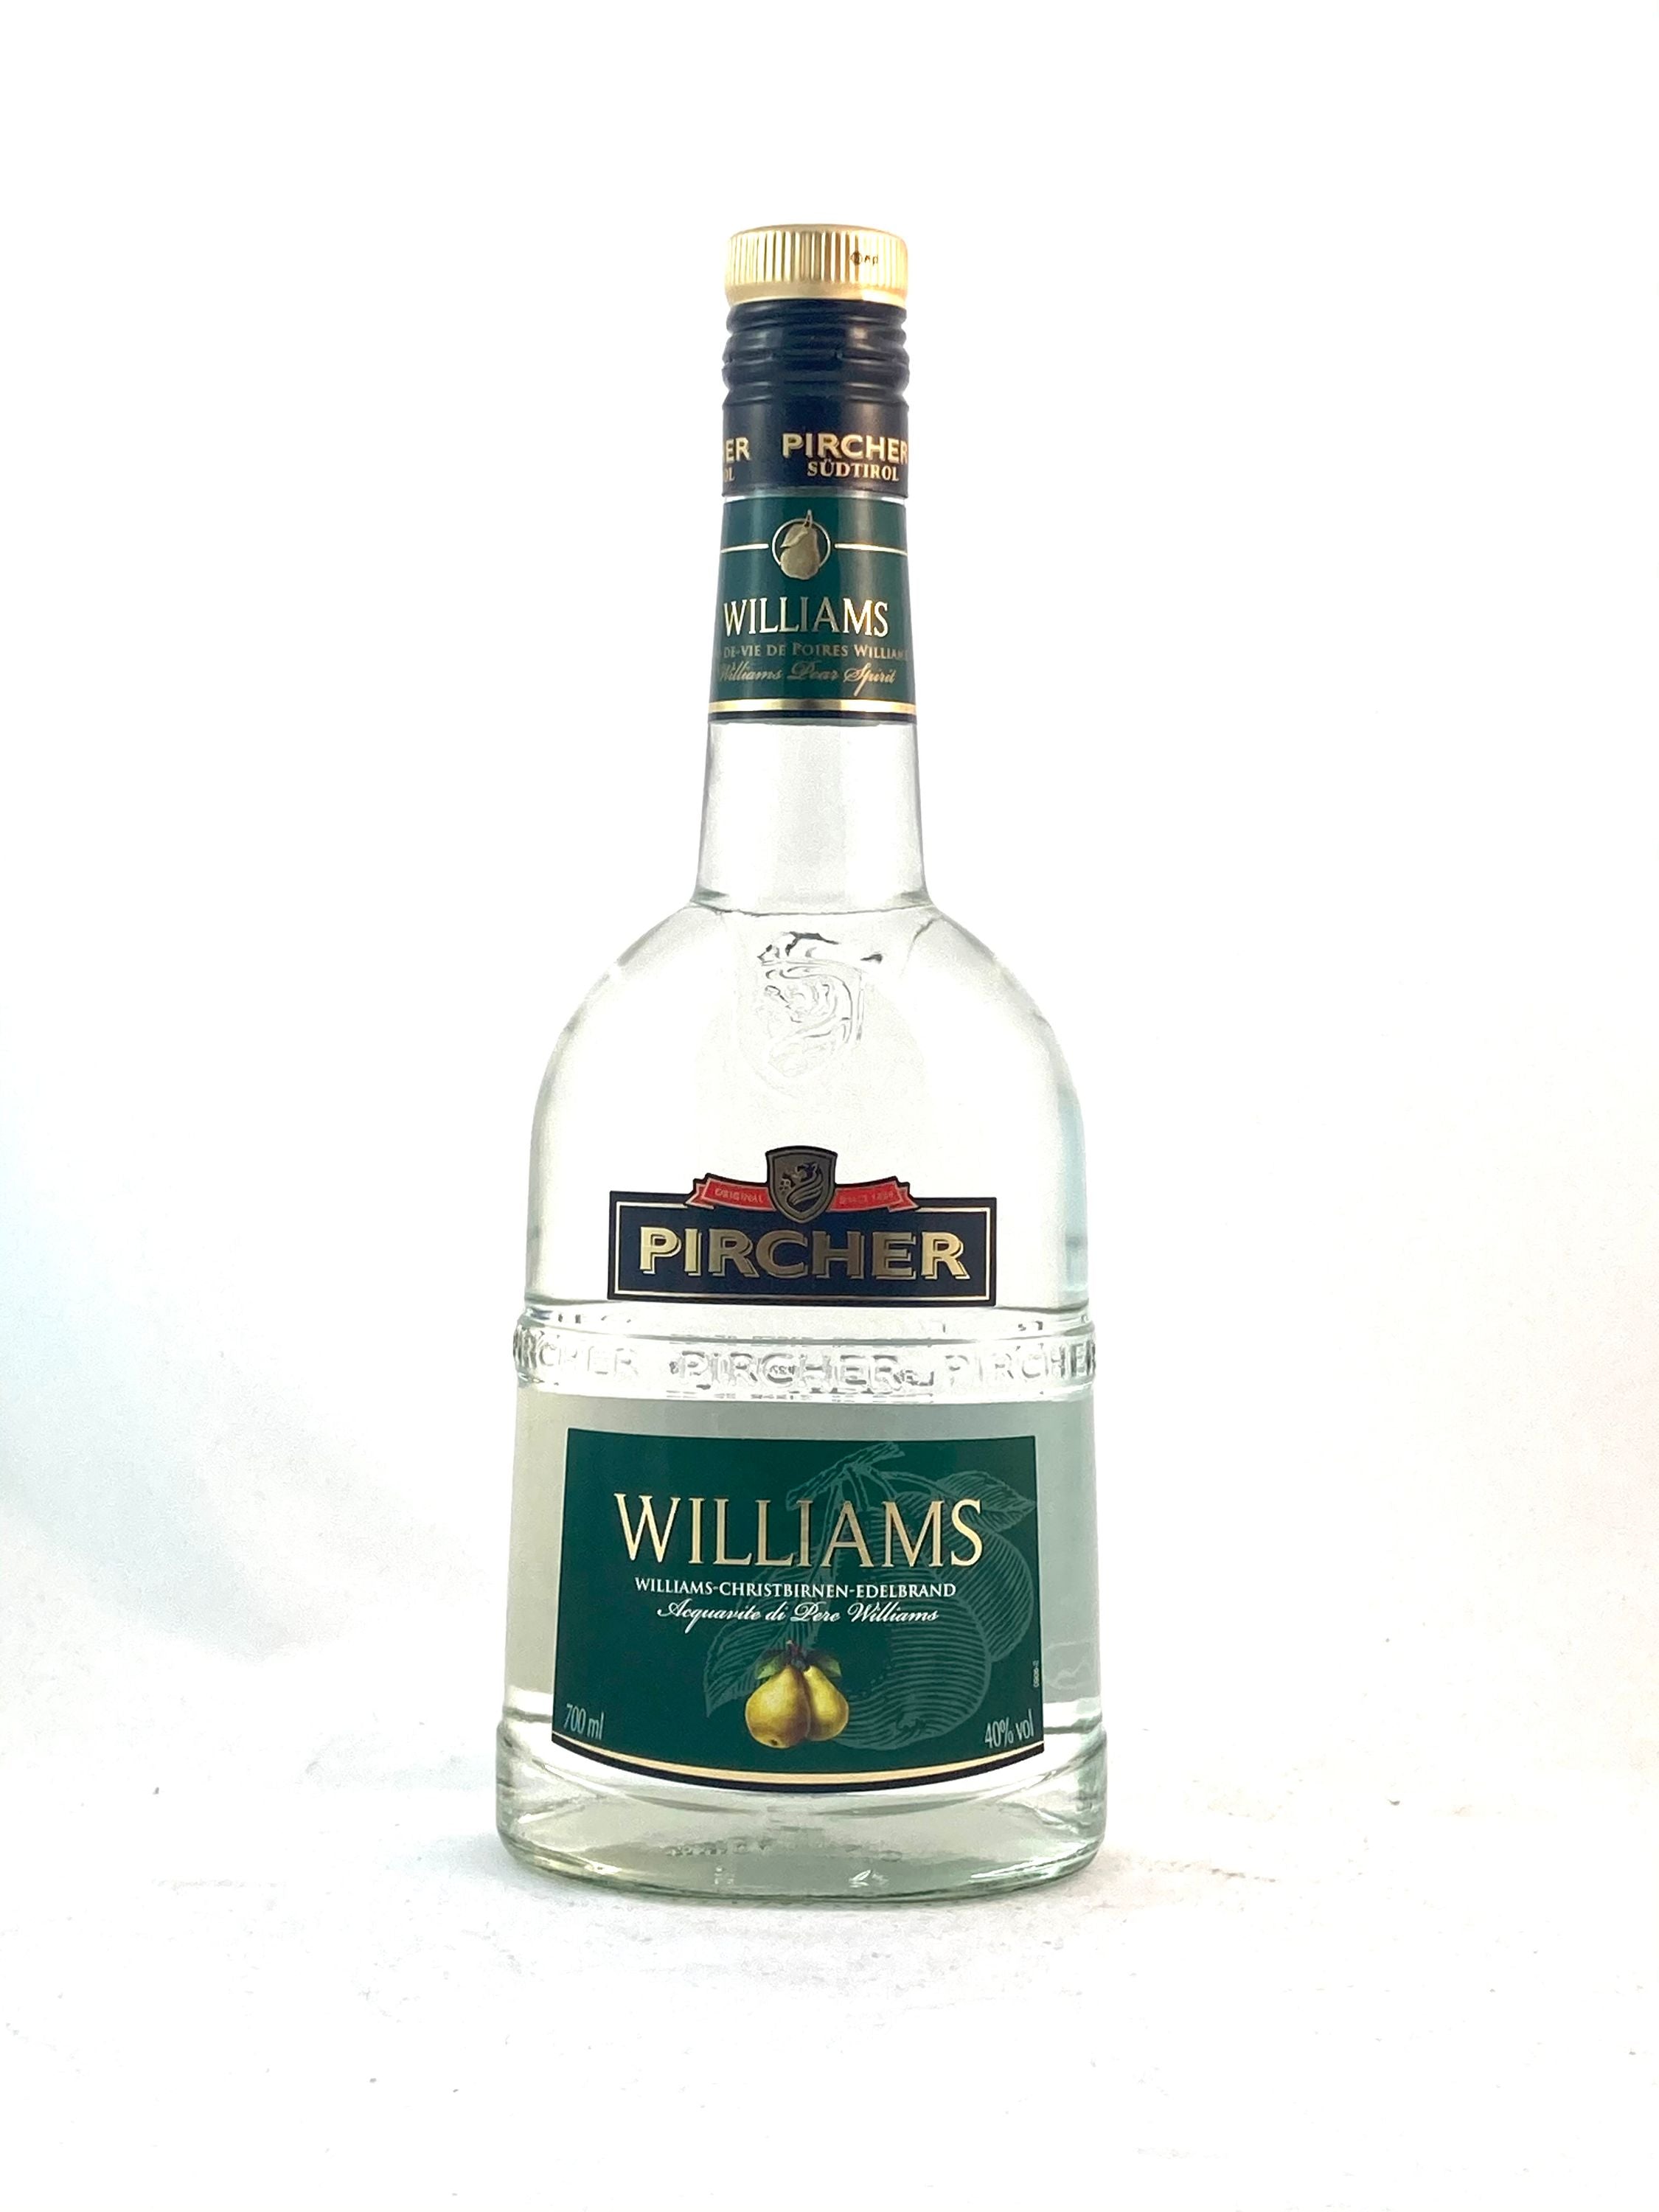 Pircher Williams 0,7l, alc. 40 Vol.-%, Italienischer Edelbrand